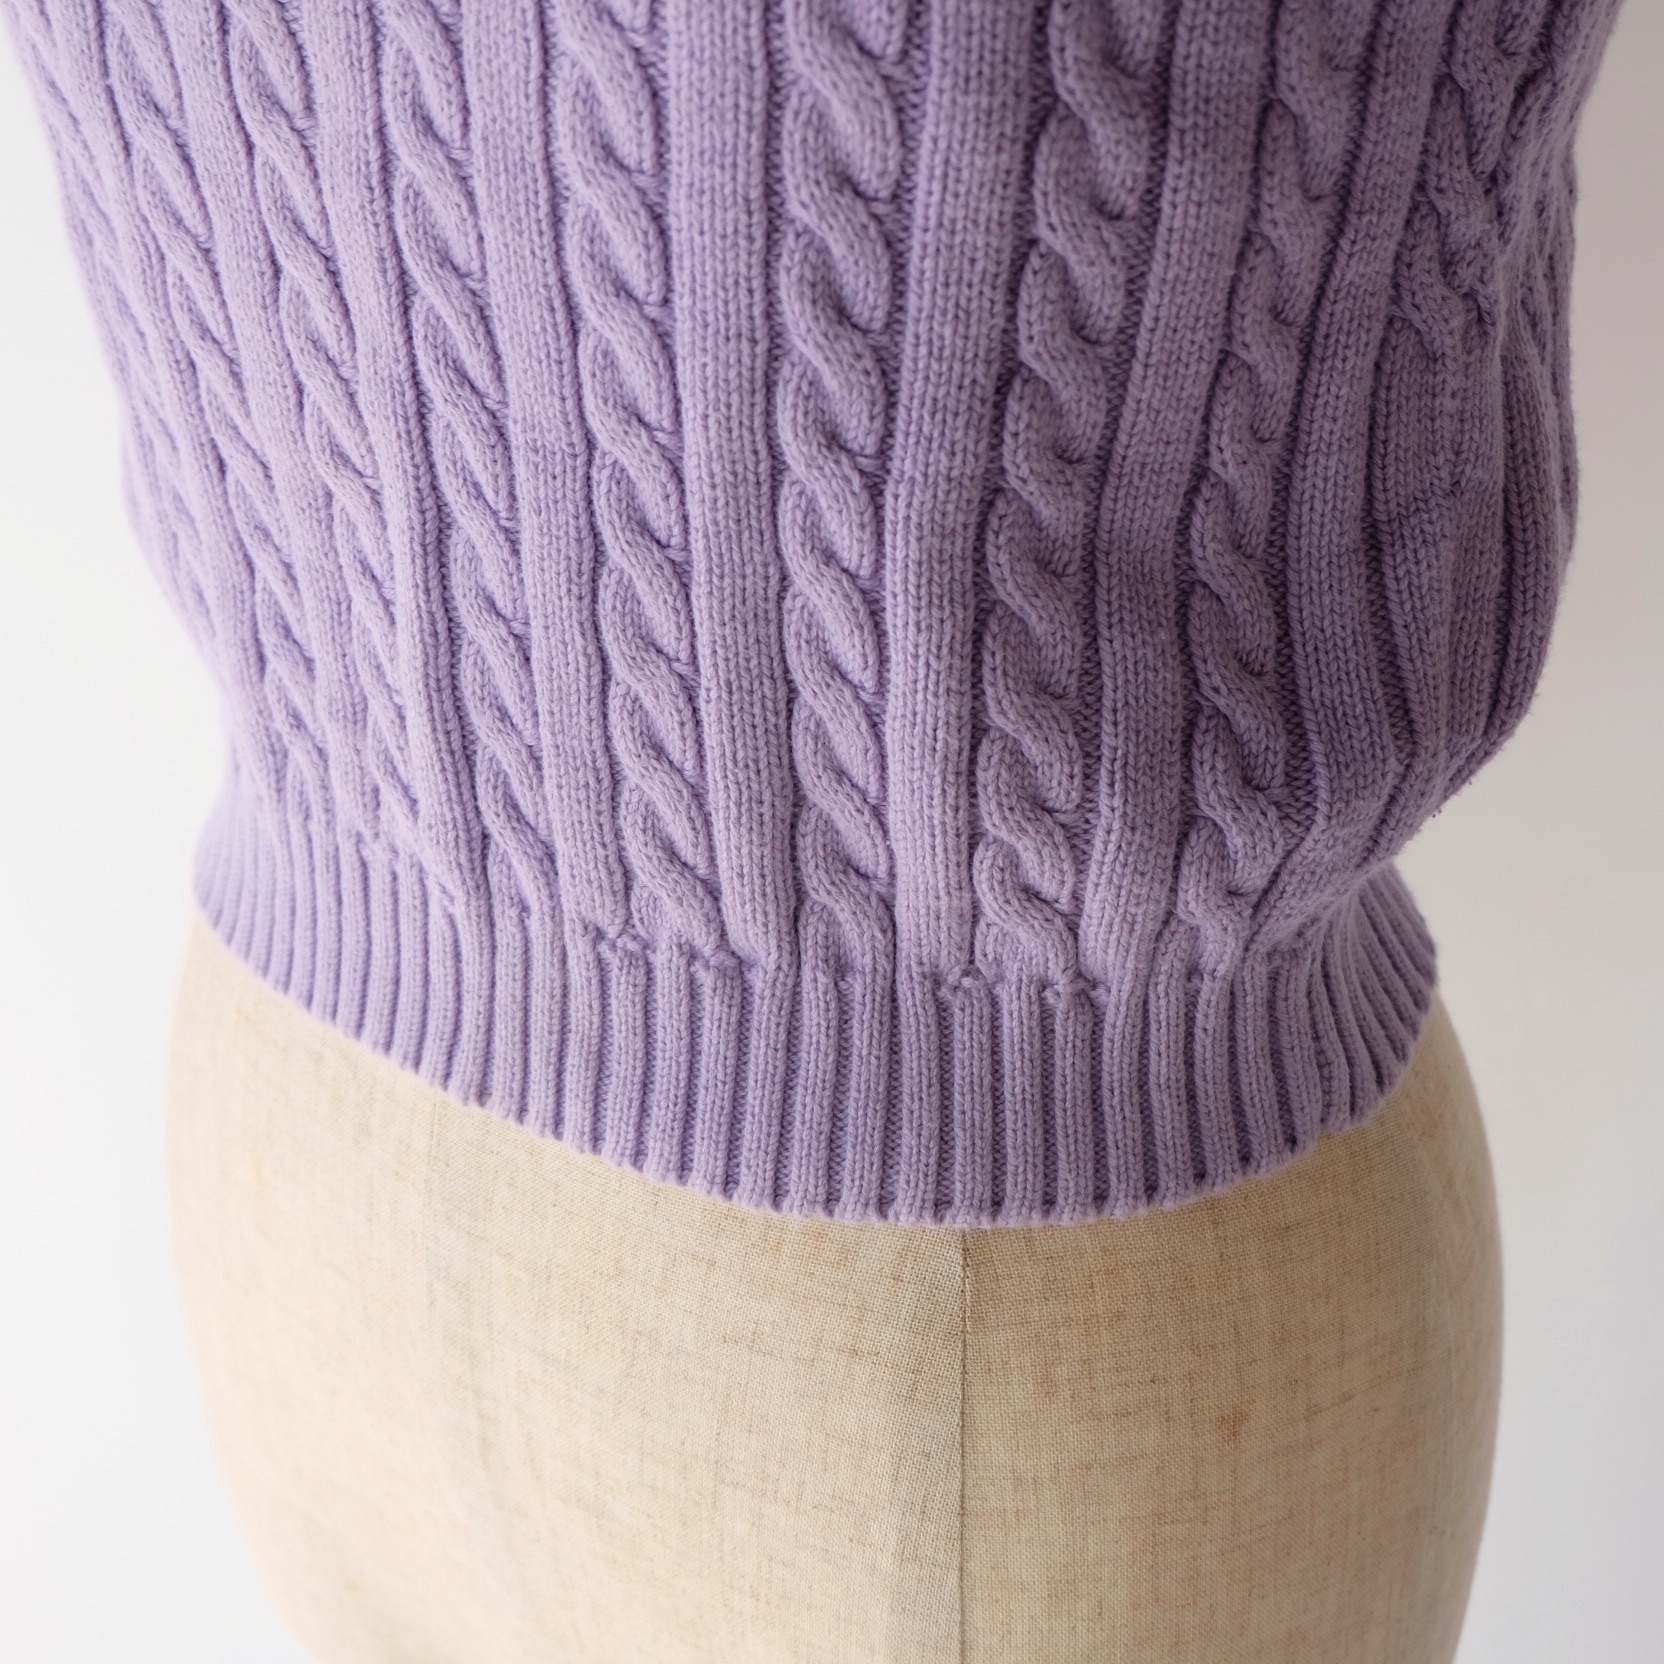 90s RALPH LAUREN cotton knit bustier